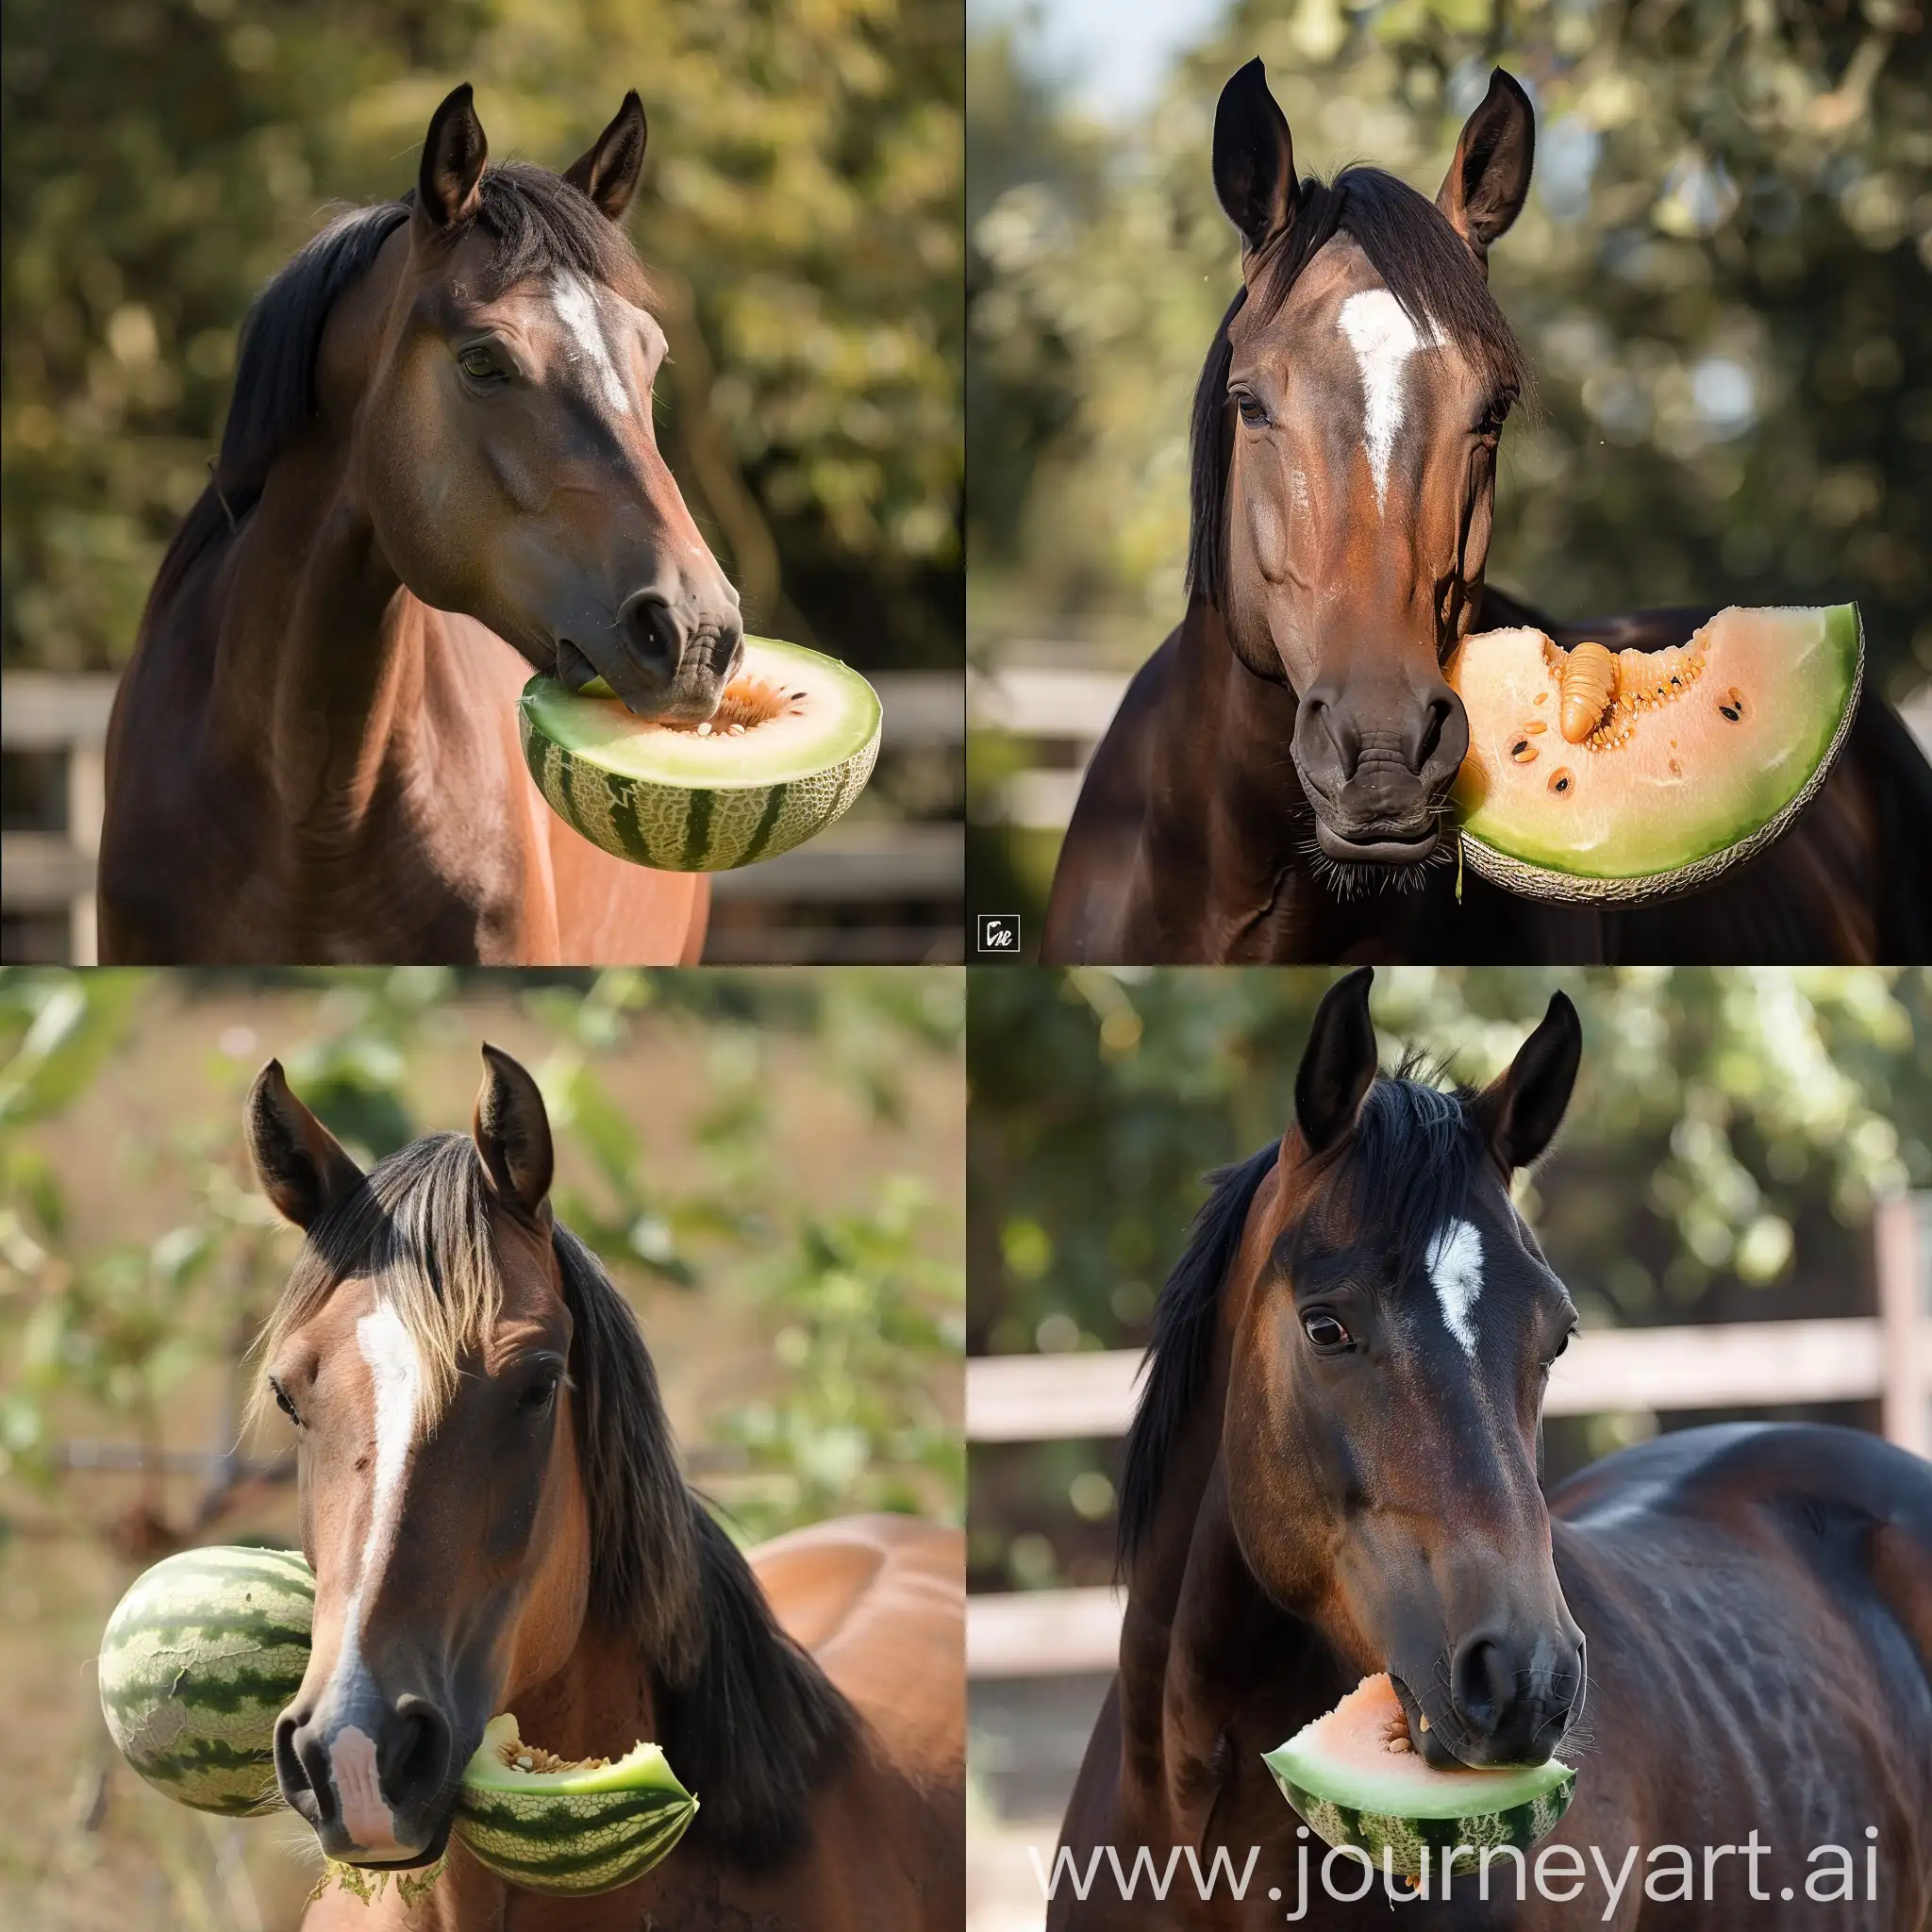 Equine-Delight-Horse-Enjoying-a-Refreshing-Melon-Snack